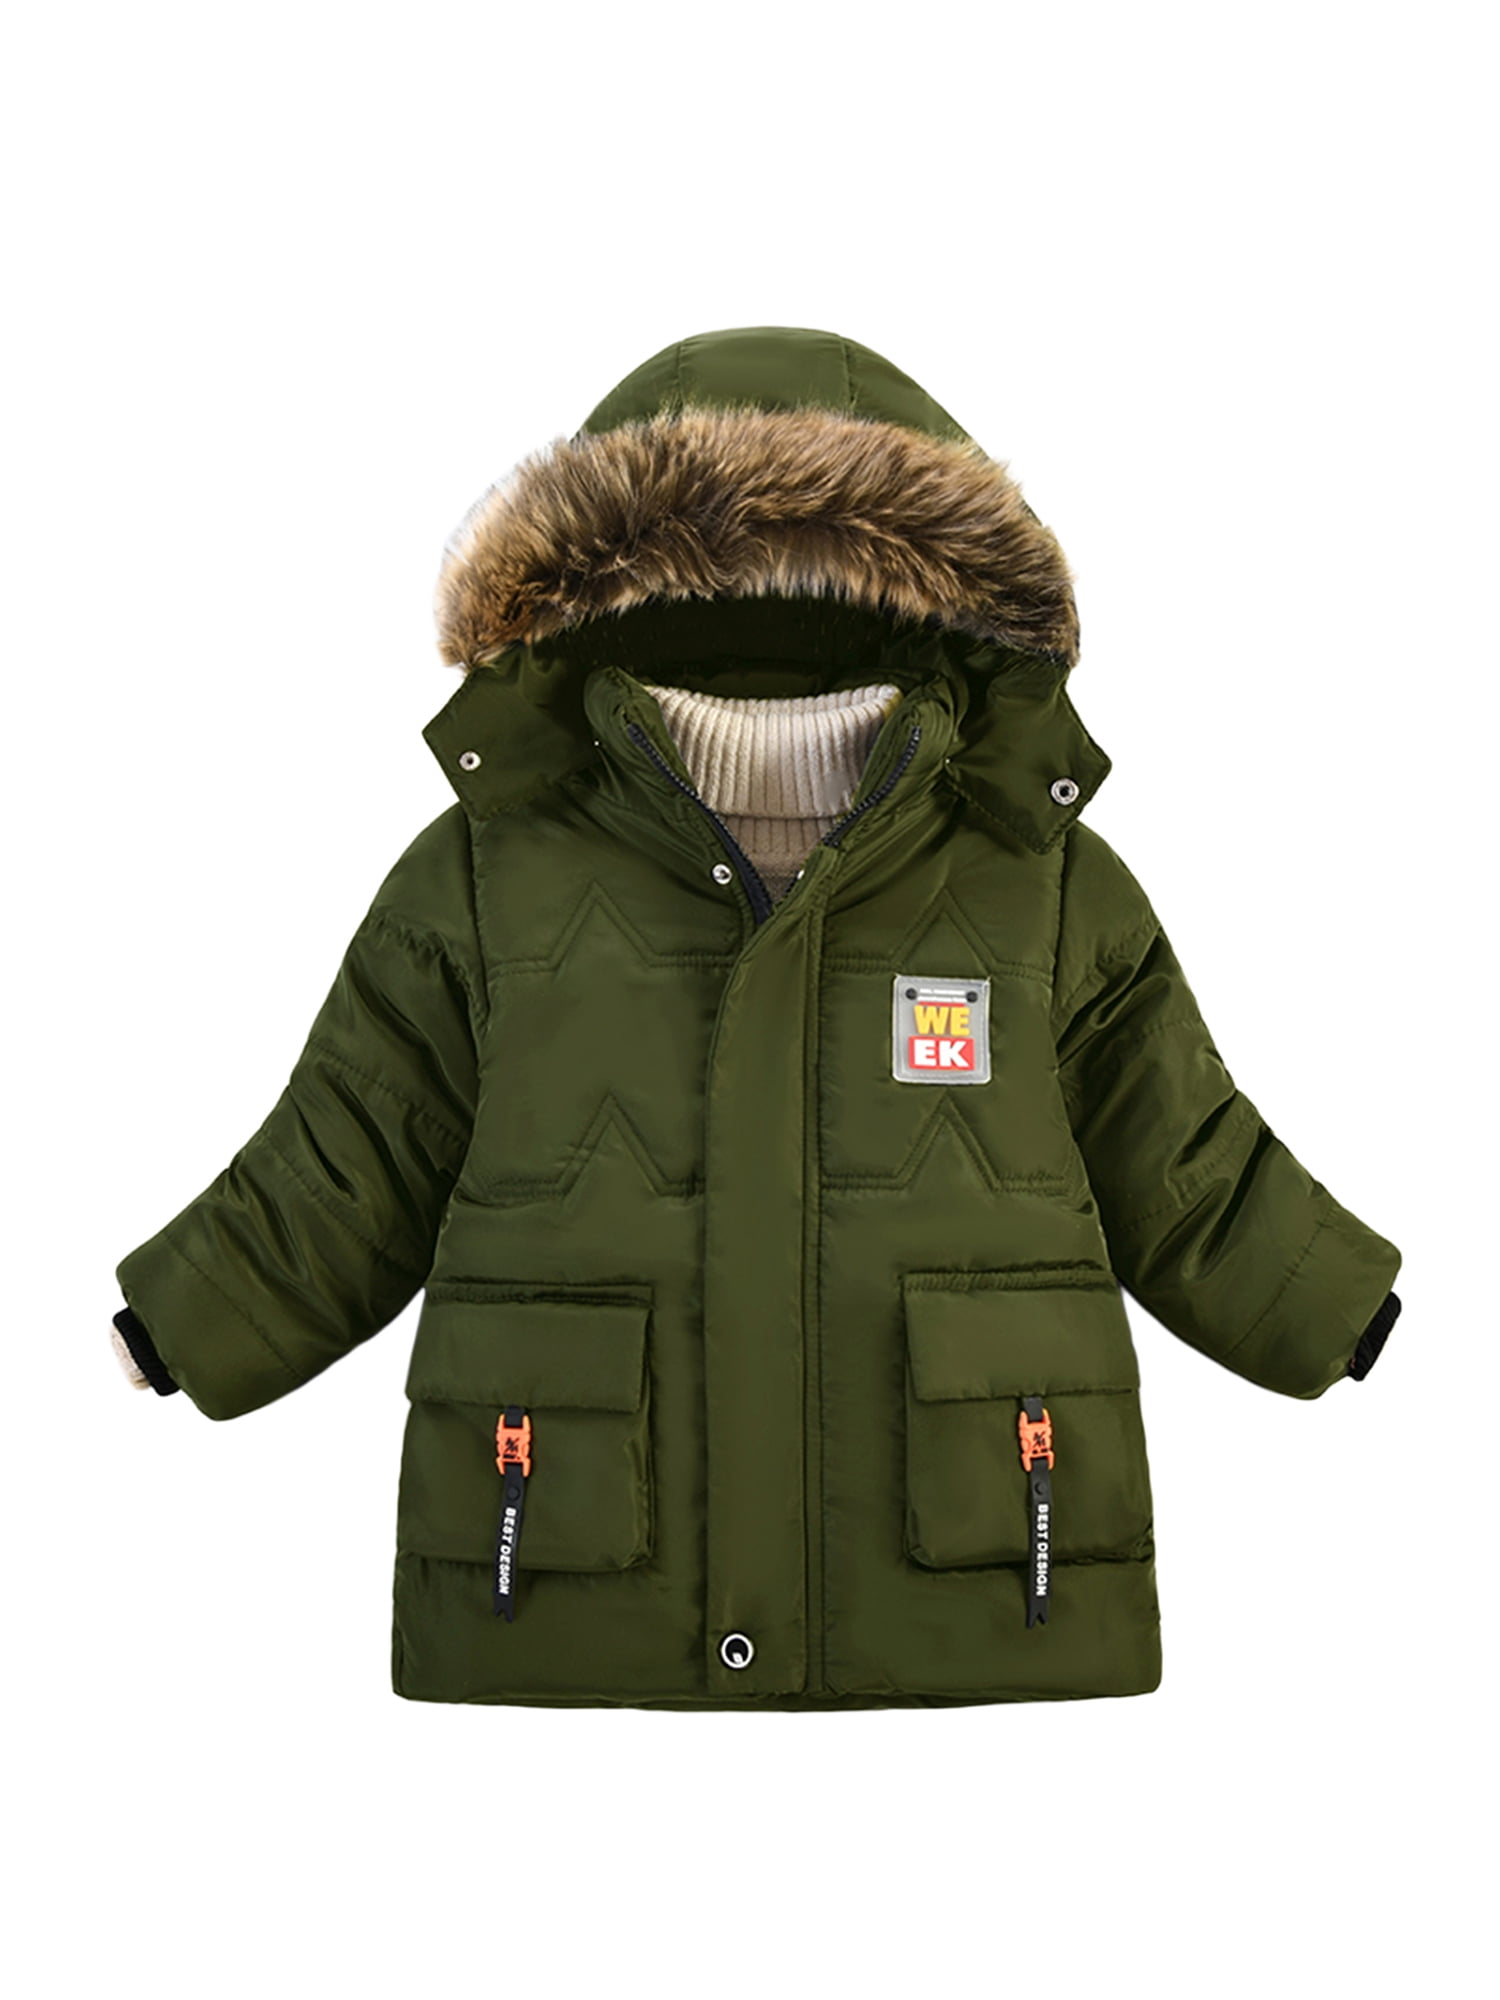 Toddler Baby Kids Boy Winter Outerwear Fur Warm Hooded Coat Down Jacket Overcoat 